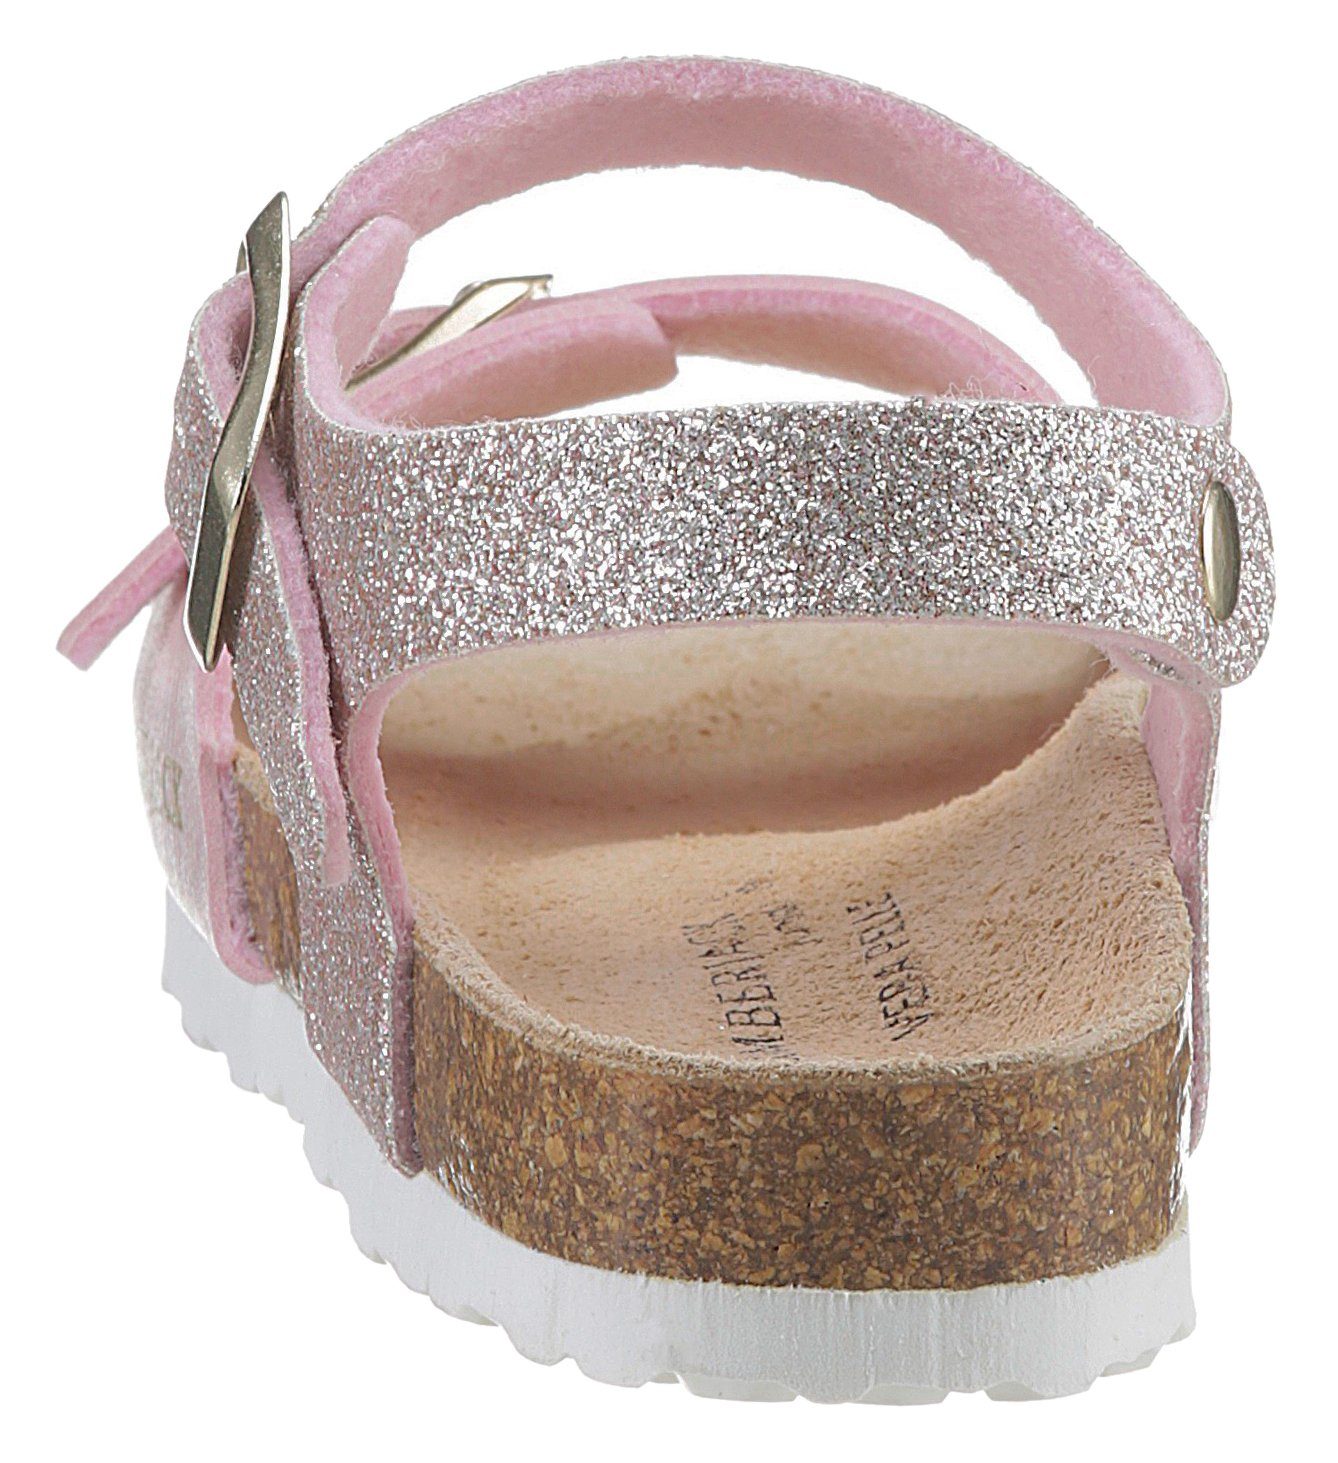 LUMBERJACK Sandale mit Glitzer rosa-metallic